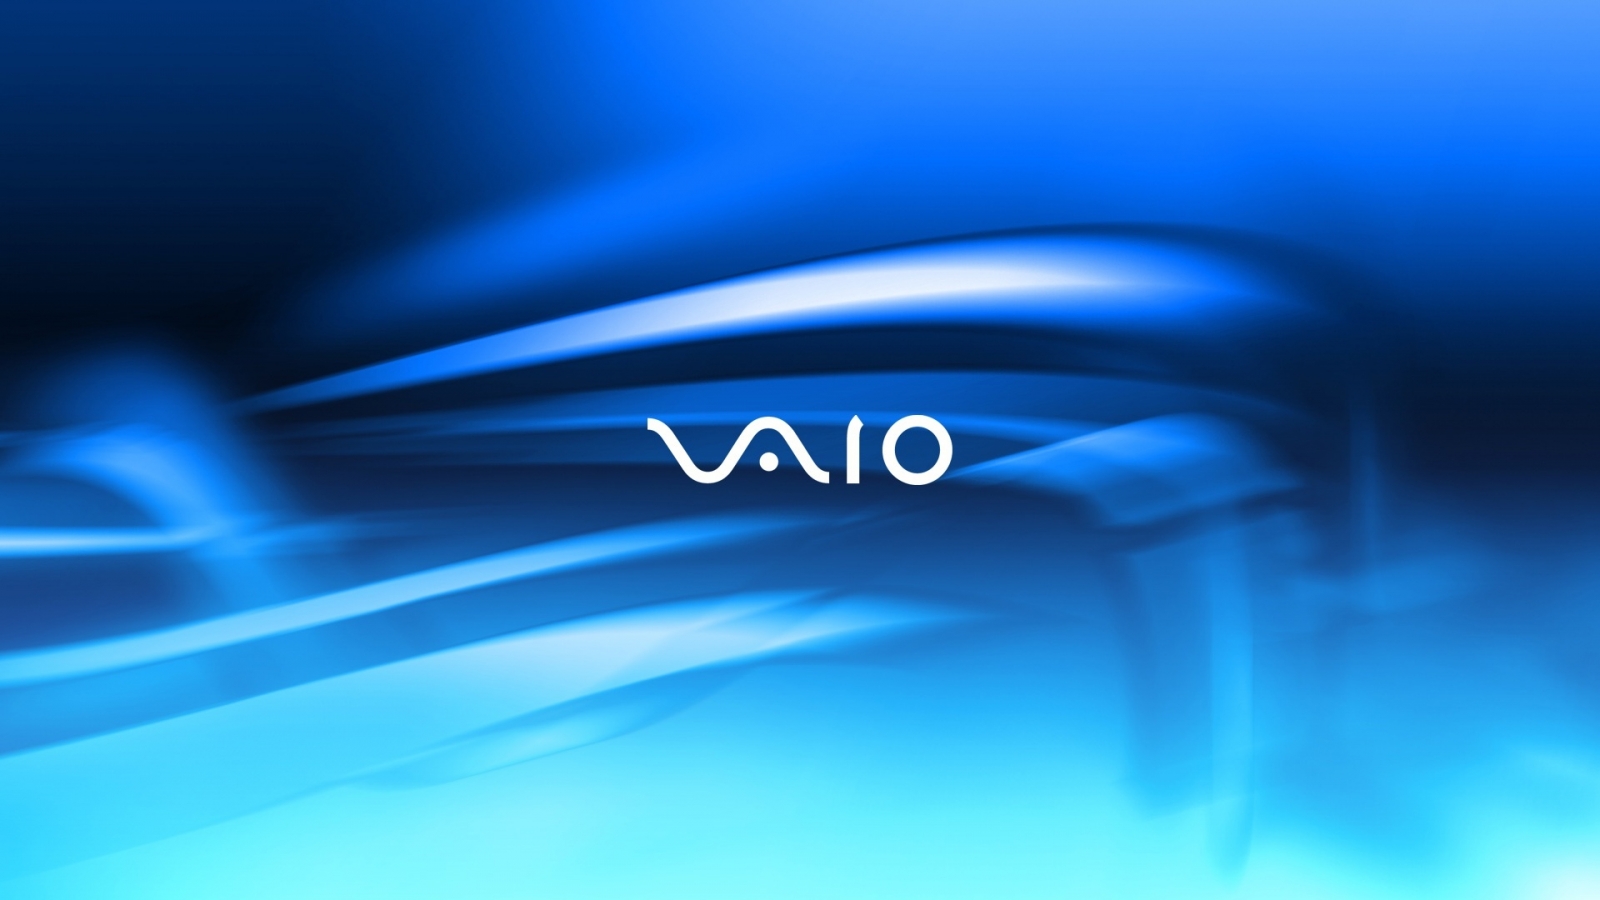 Vaio light blue for 1600 x 900 HDTV resolution